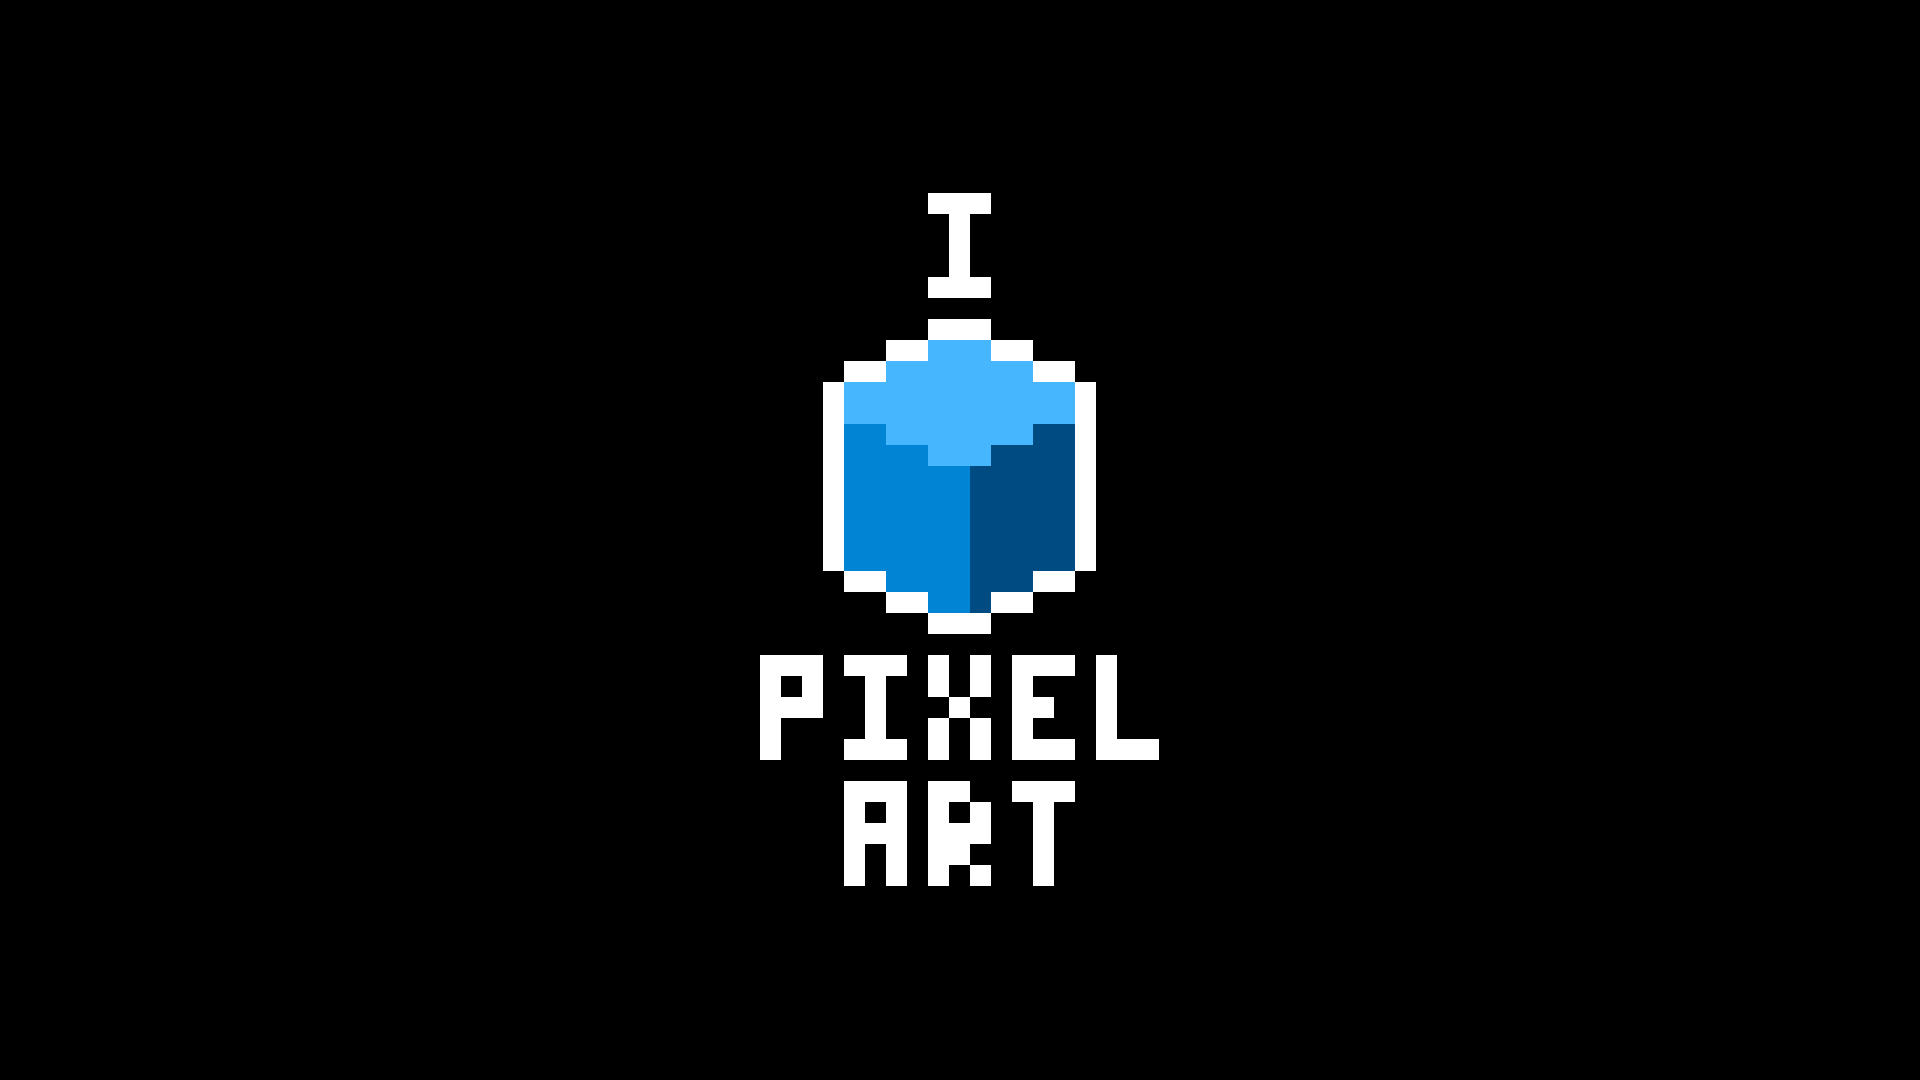 General 1920x1080 pixel art pixels minimalism typography digital art blue black background